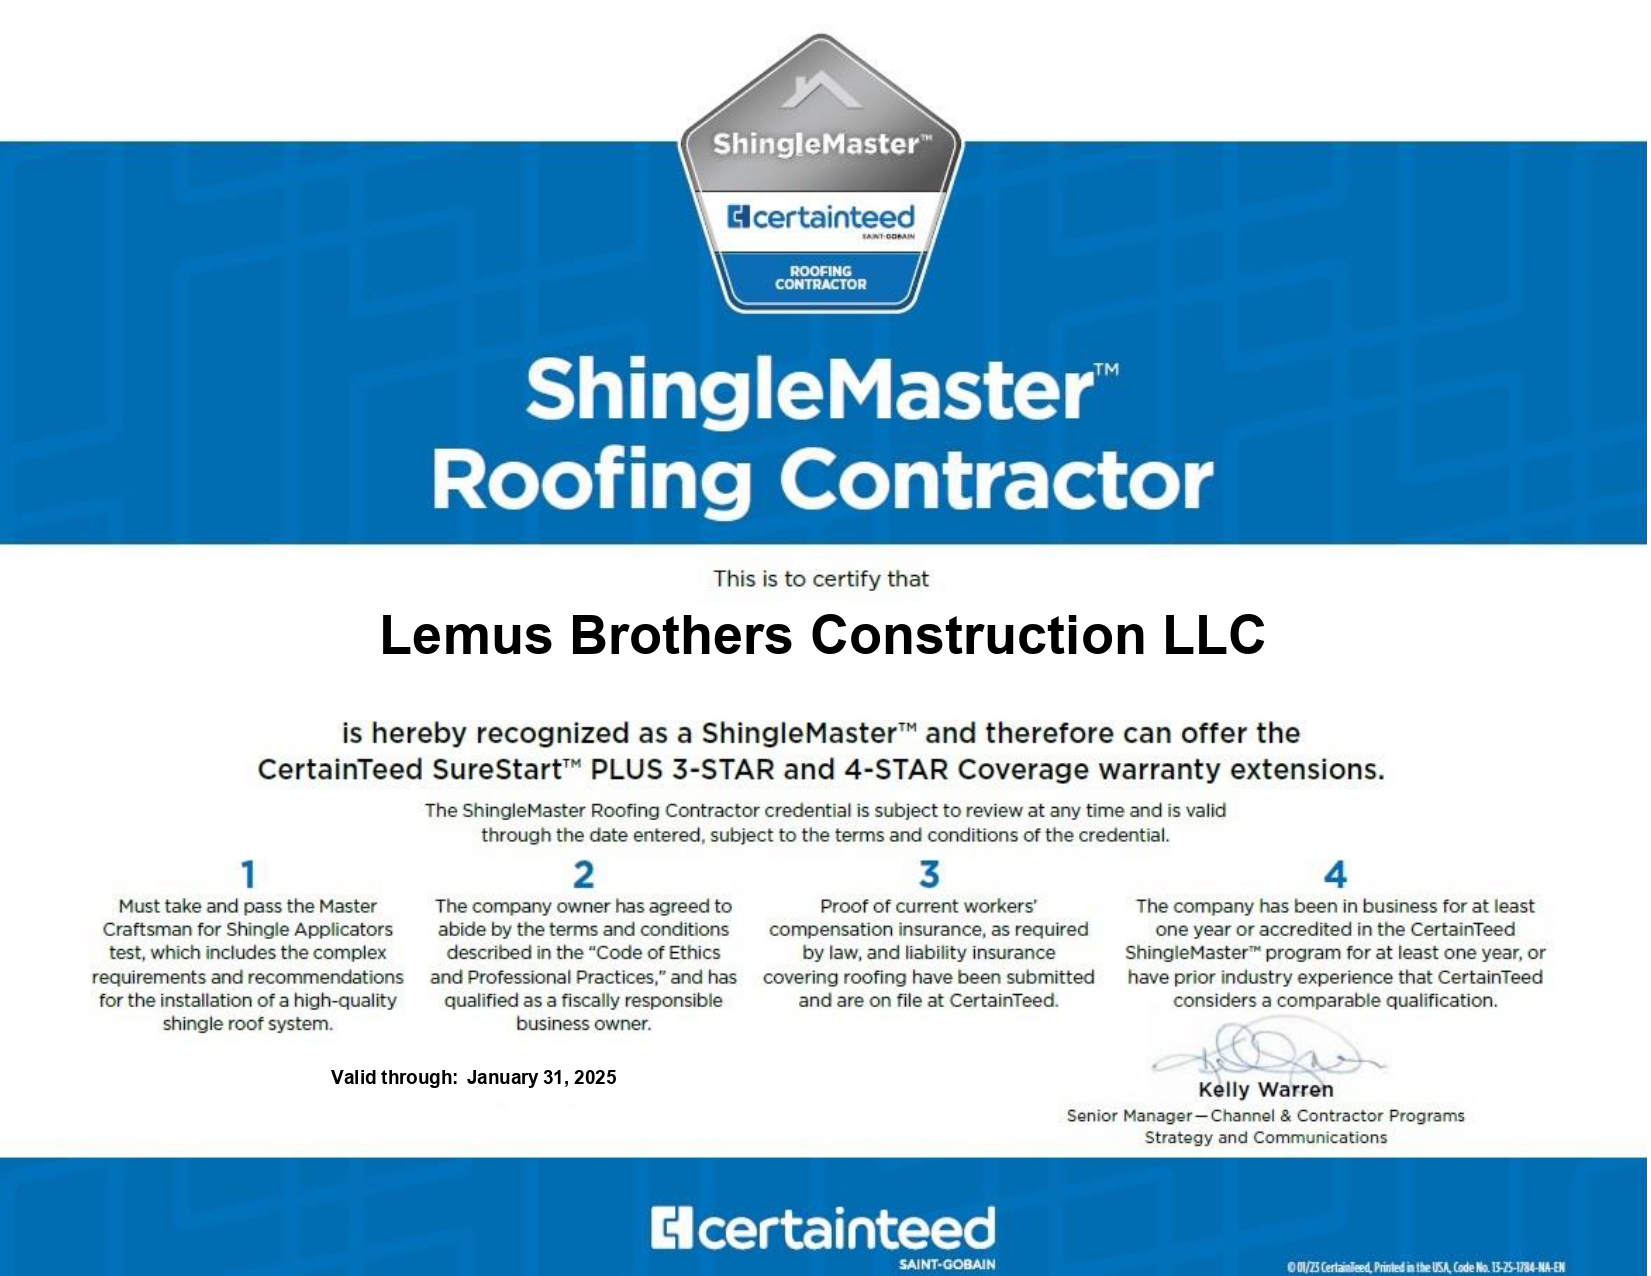 LEMUS BROTHERS CONSTRUCTION LLC